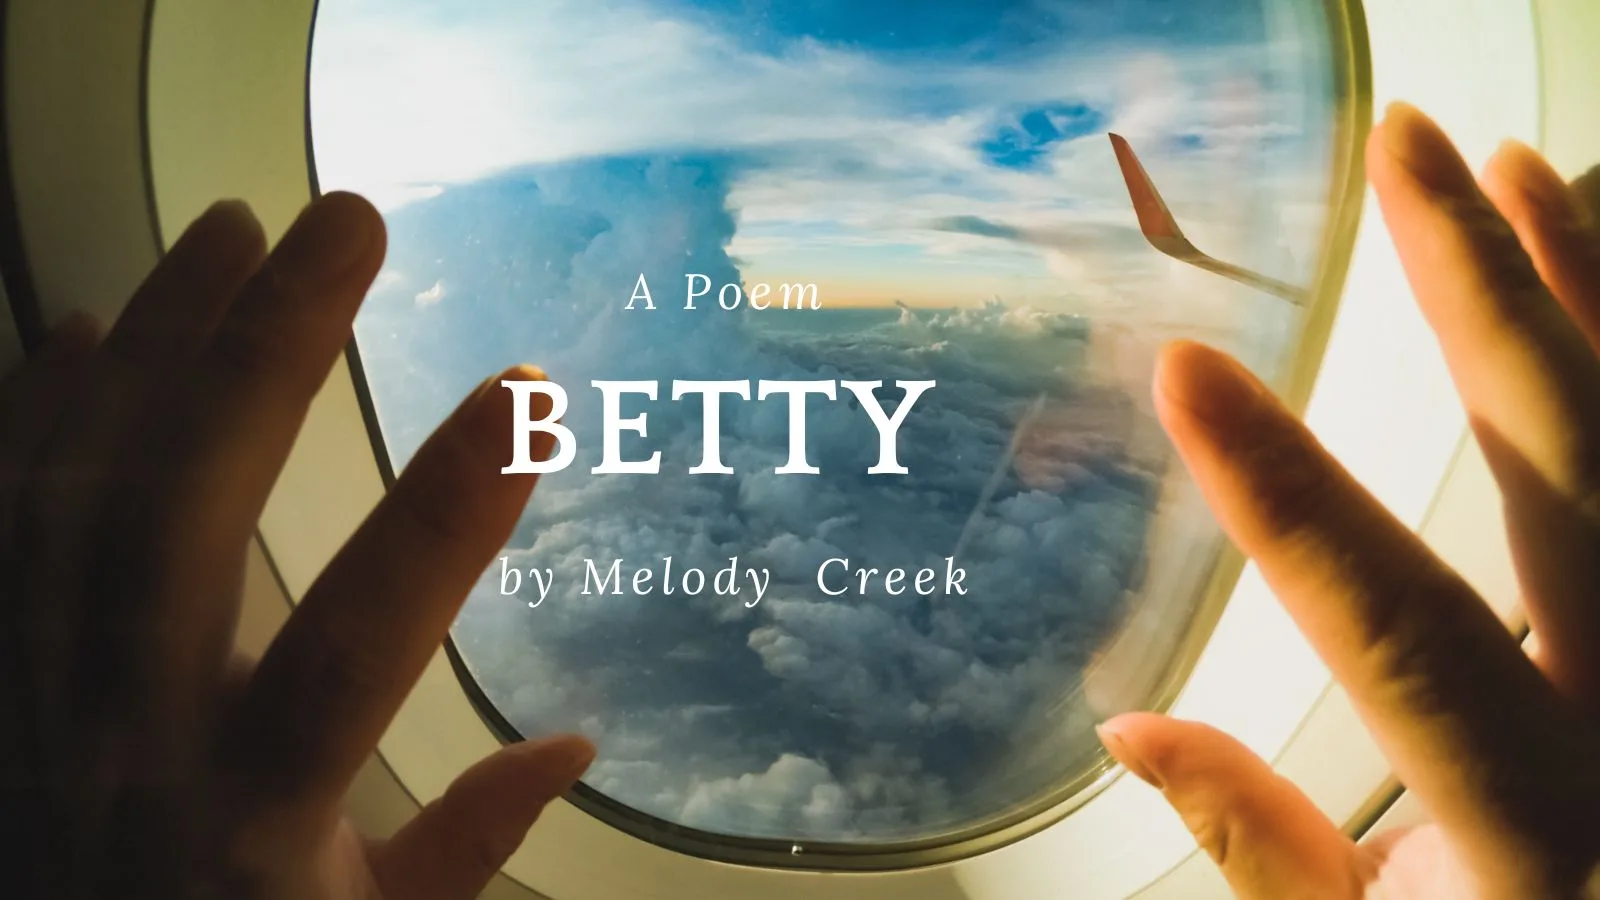 betty by Melody creek (1